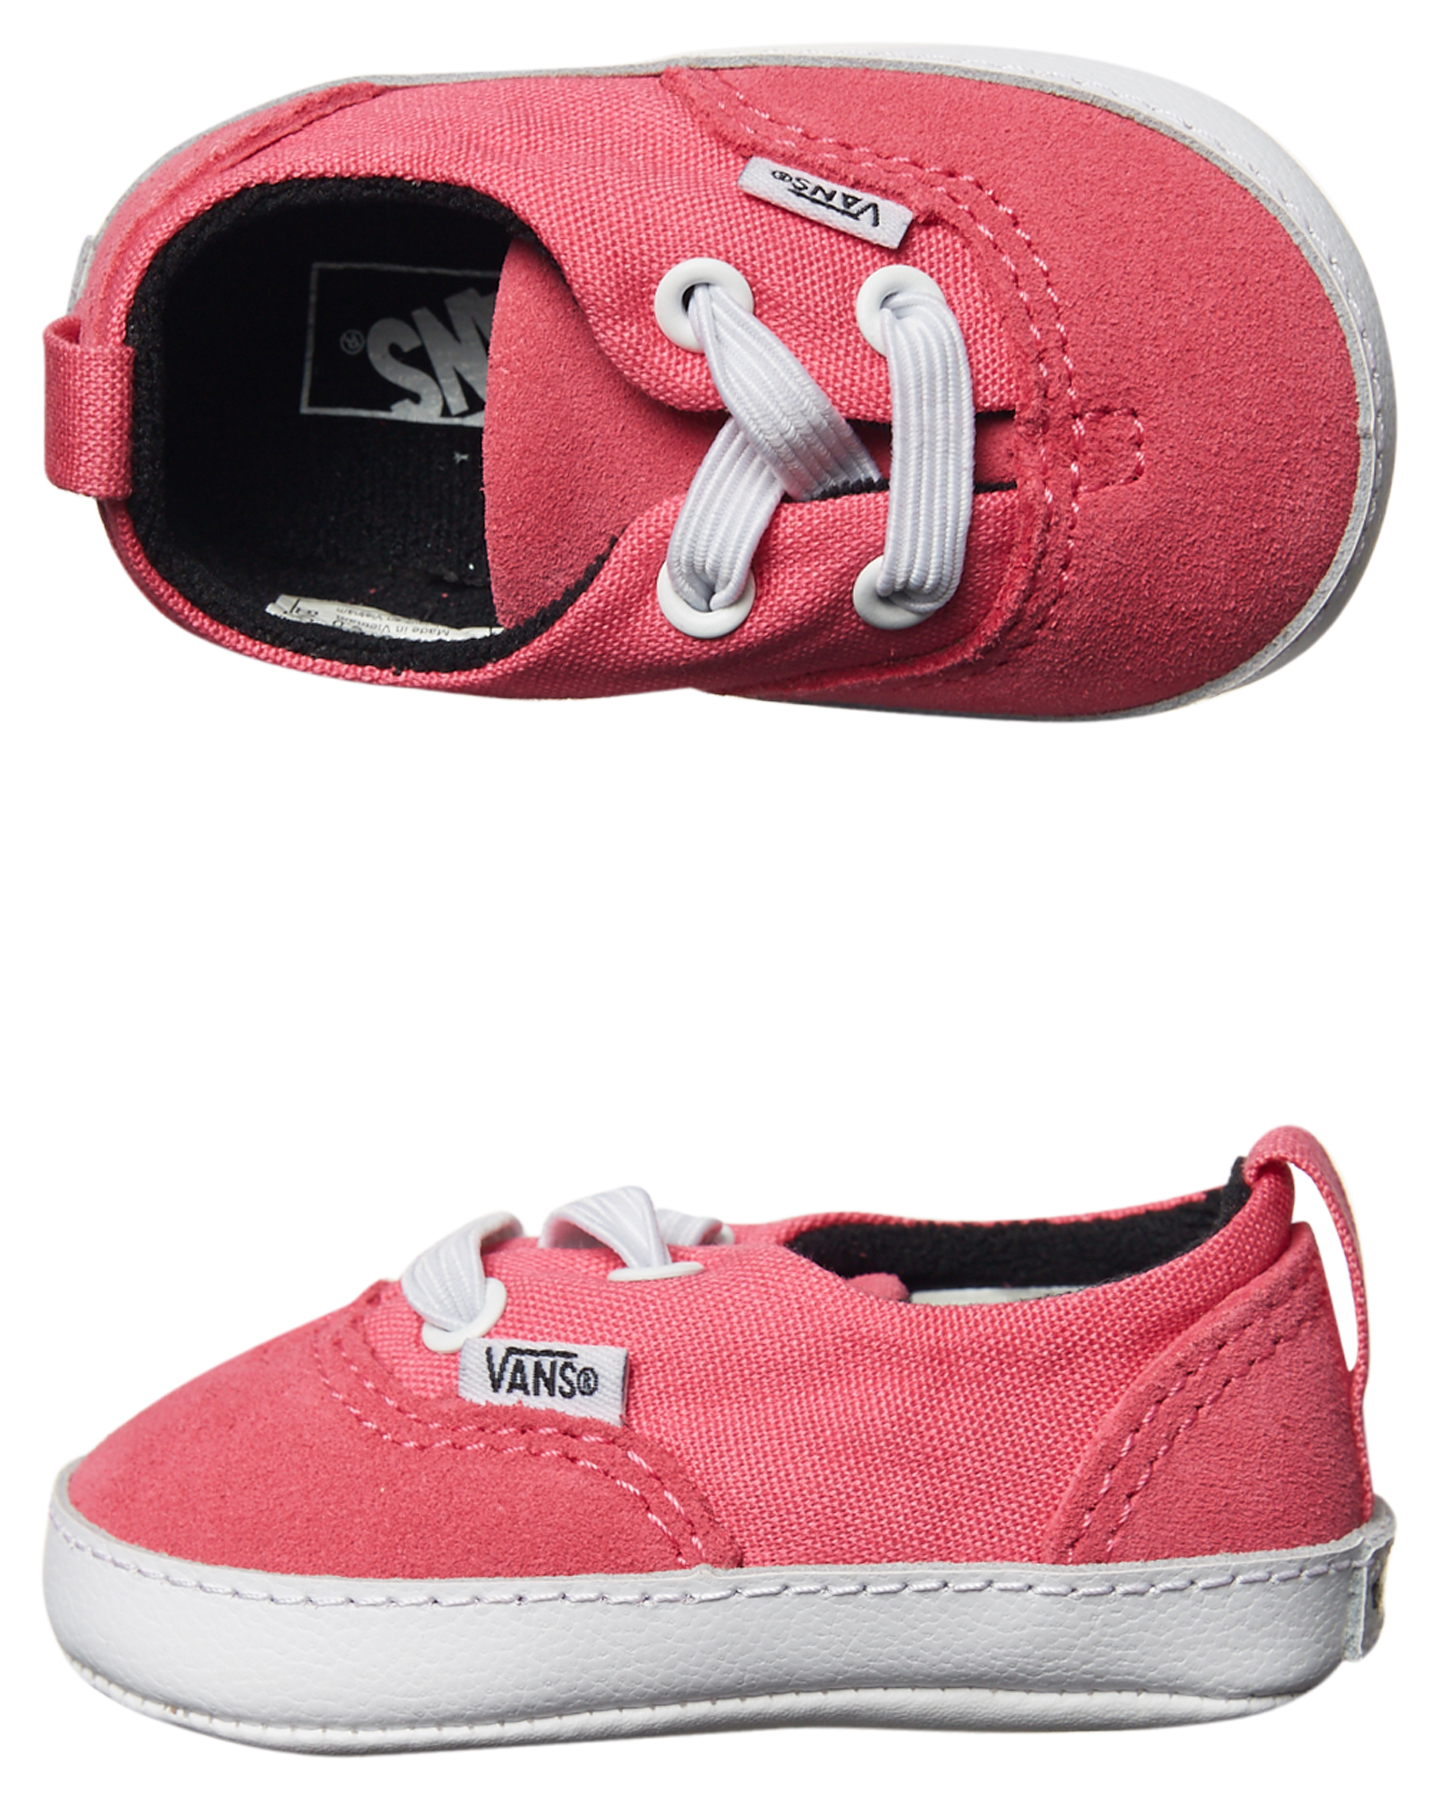 Vans Slip On V Crib Baby Shoe - Hot Pink | SurfStitch